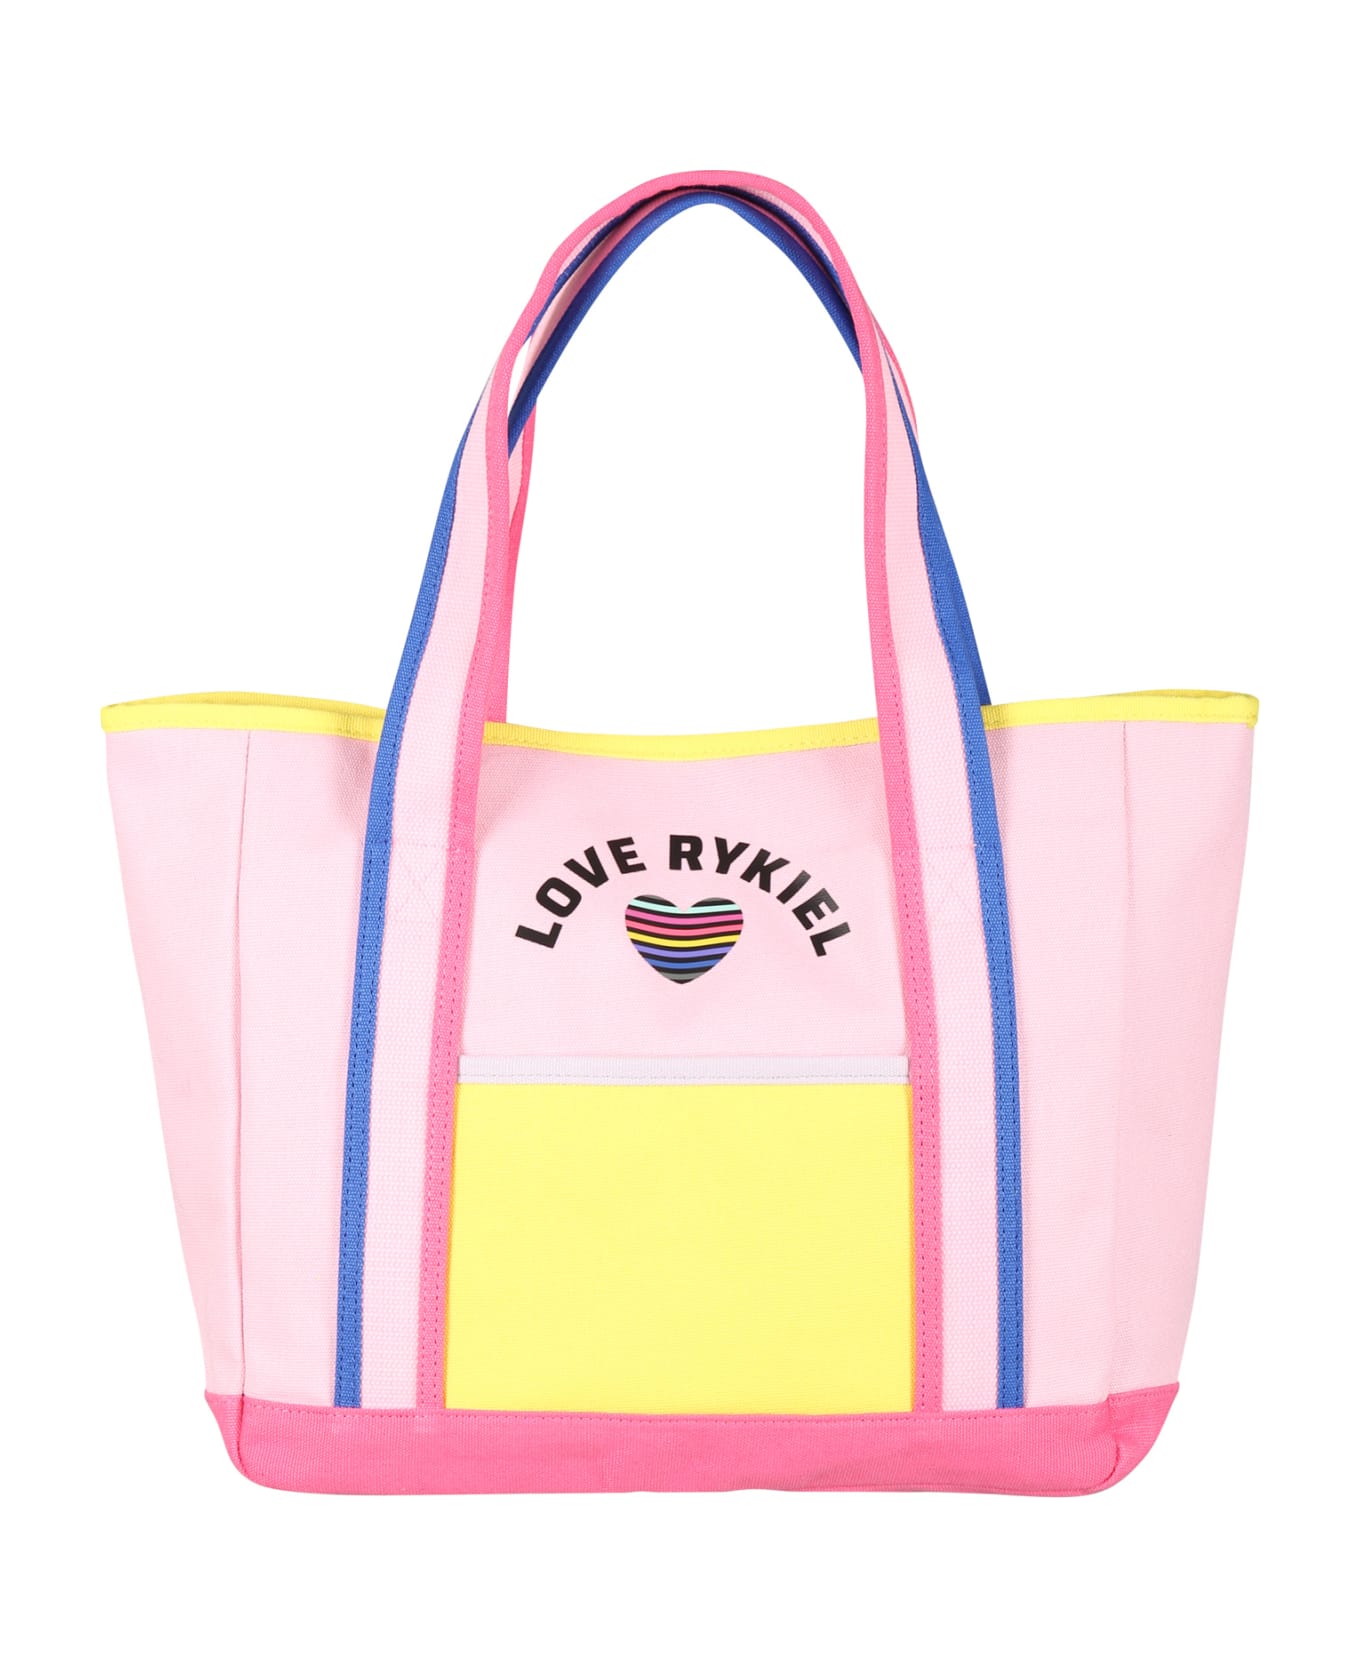 Rykiel Enfant Pink Bag For Girl With Love Rykiel Writing - Pink アクセサリー＆ギフト